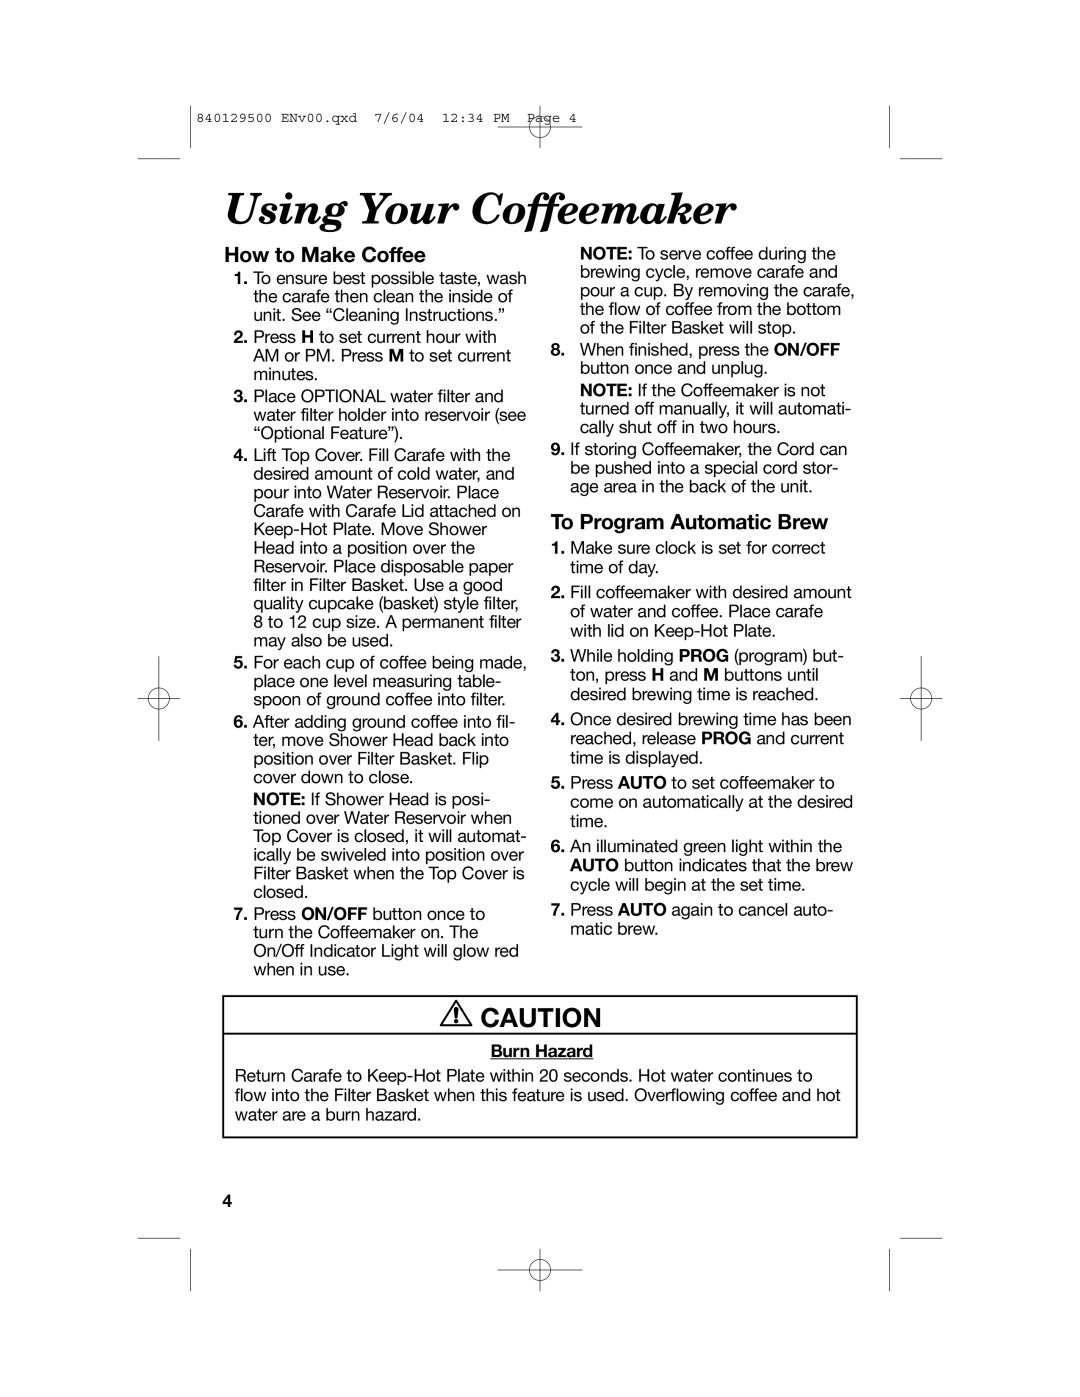 Hamilton Beach Programmable Coffeemaker Using Your Coffeemaker, How to Make Coffee, To Program Automatic Brew, Burn Hazard 